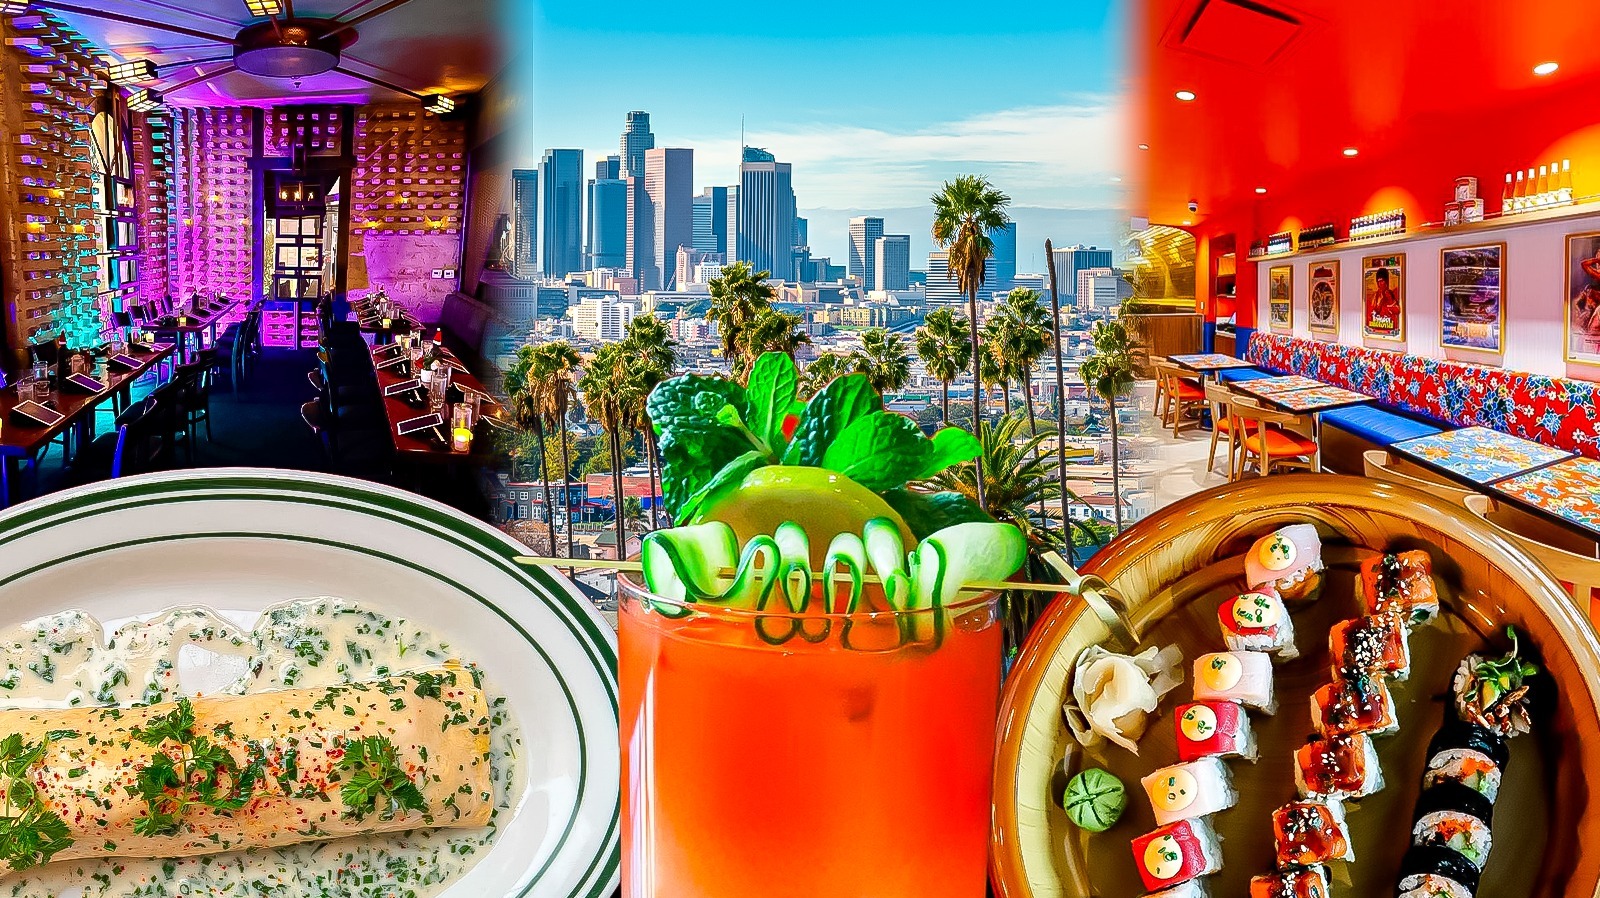 20 Best Restaurants In West Hollywood – Tasting Table